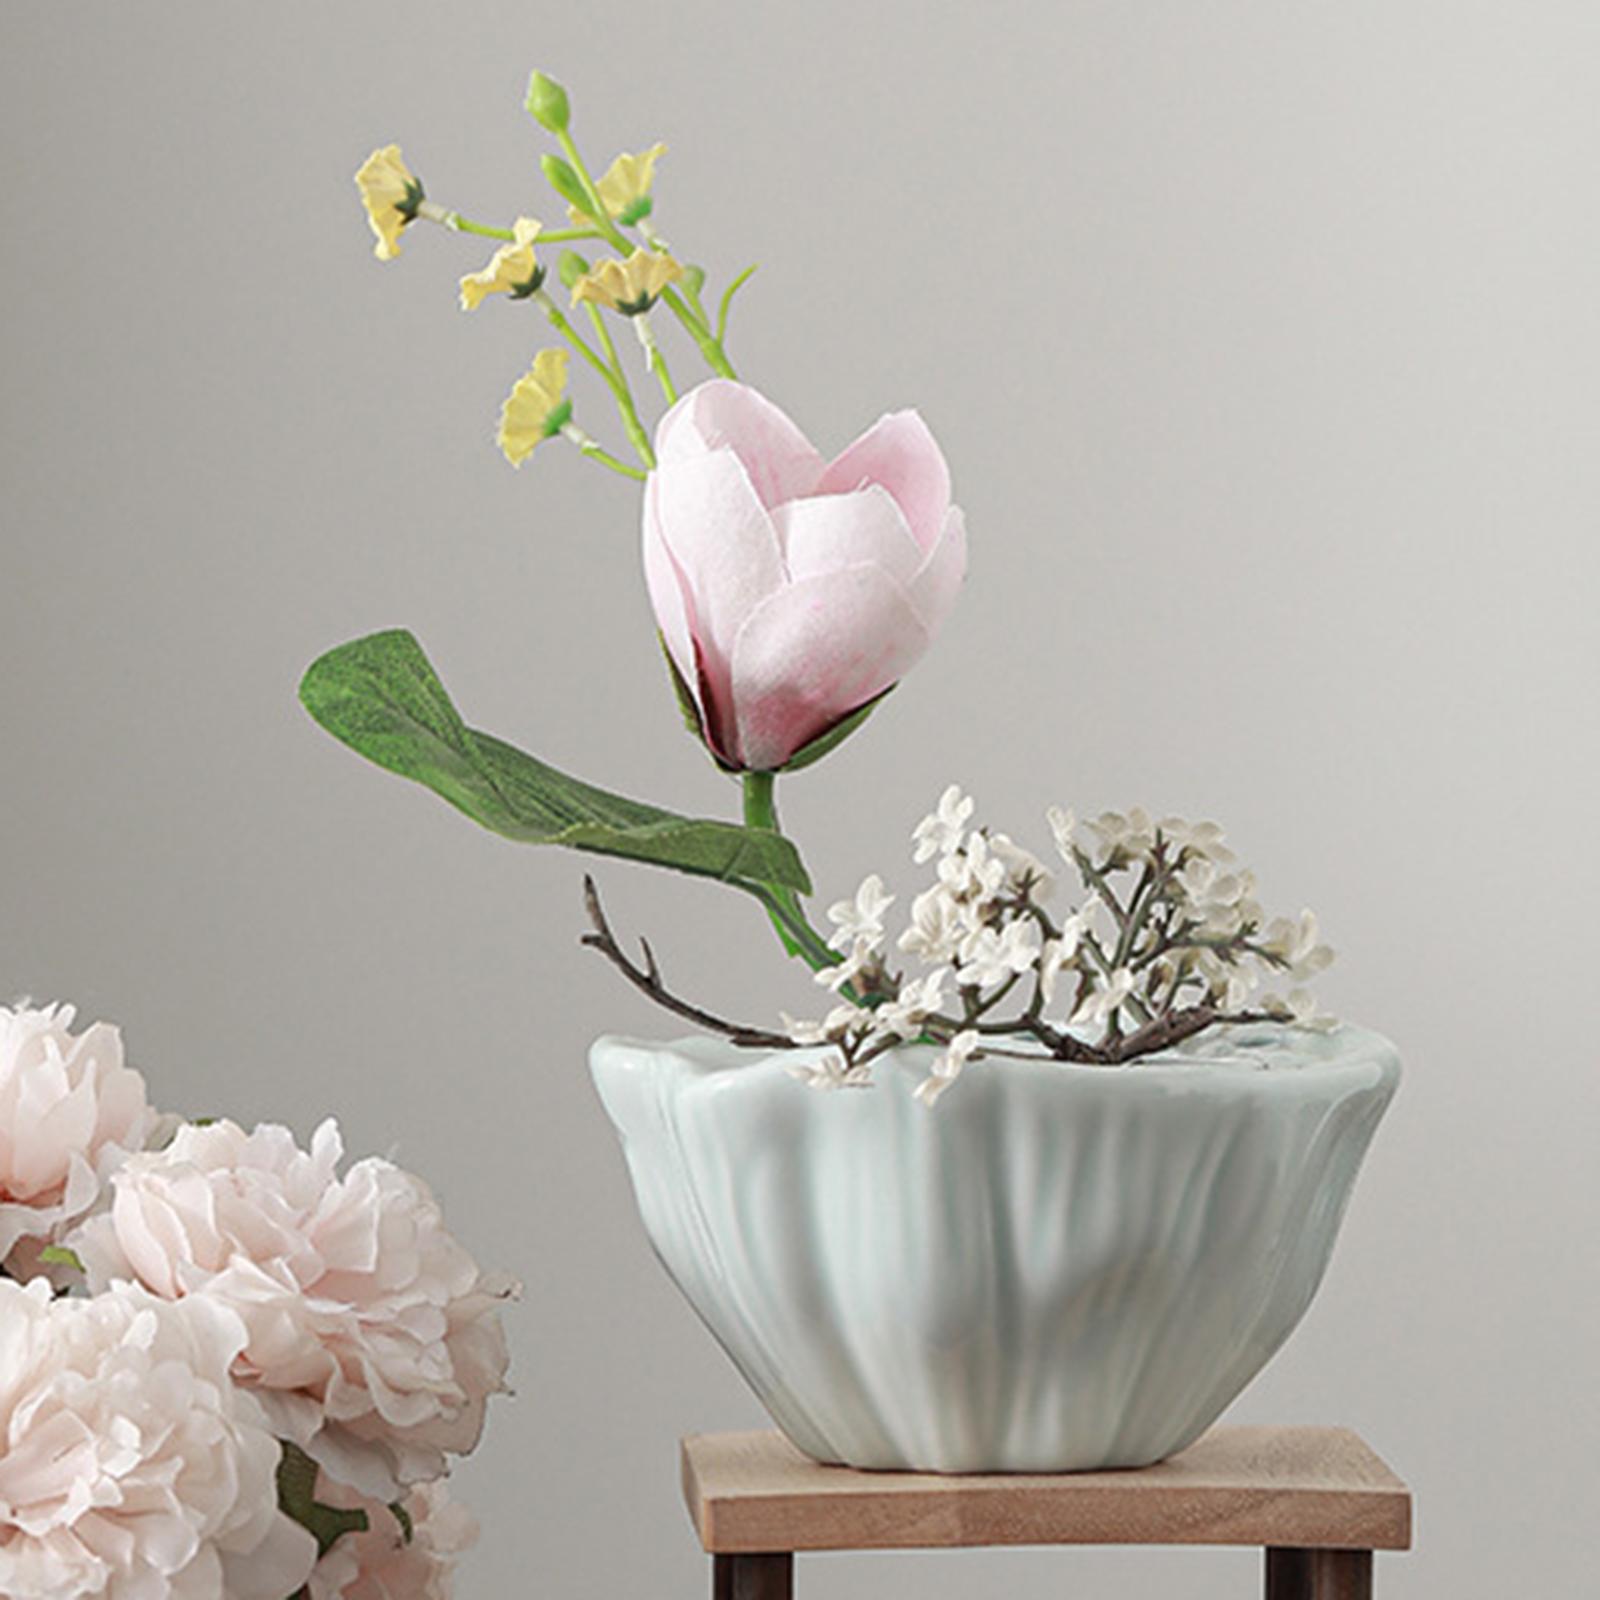 Chinese Lotus Pod Shaped Flower Vase Planter Pot Artistic for Photo Props Light Green